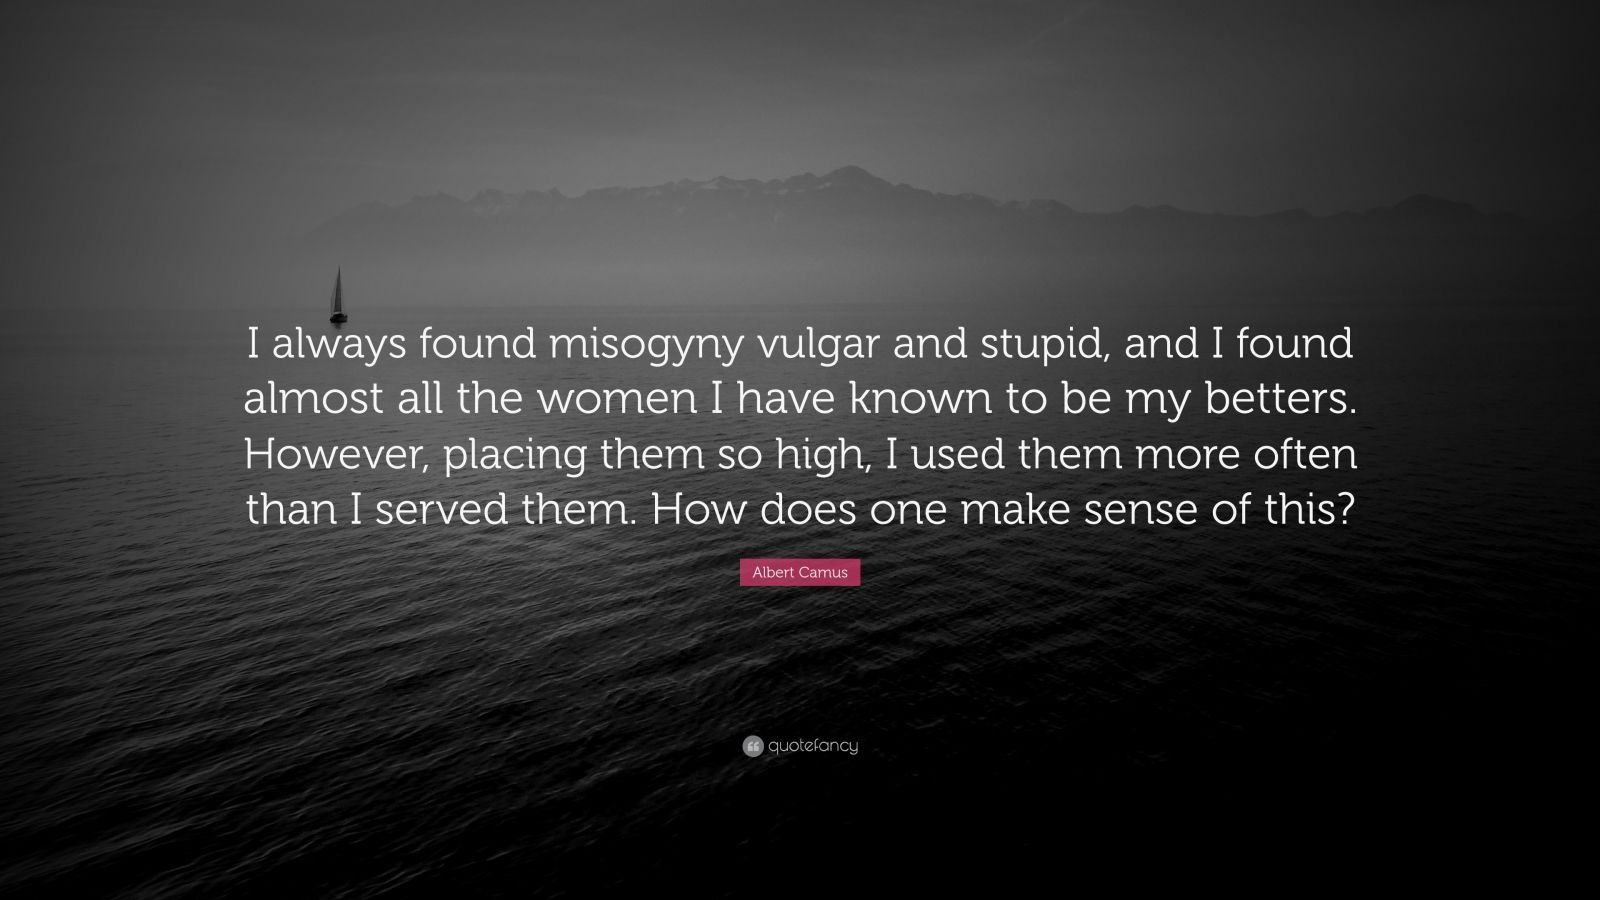 Albert Camus Quote: “I always found misogyny vulgar and stupid, and I